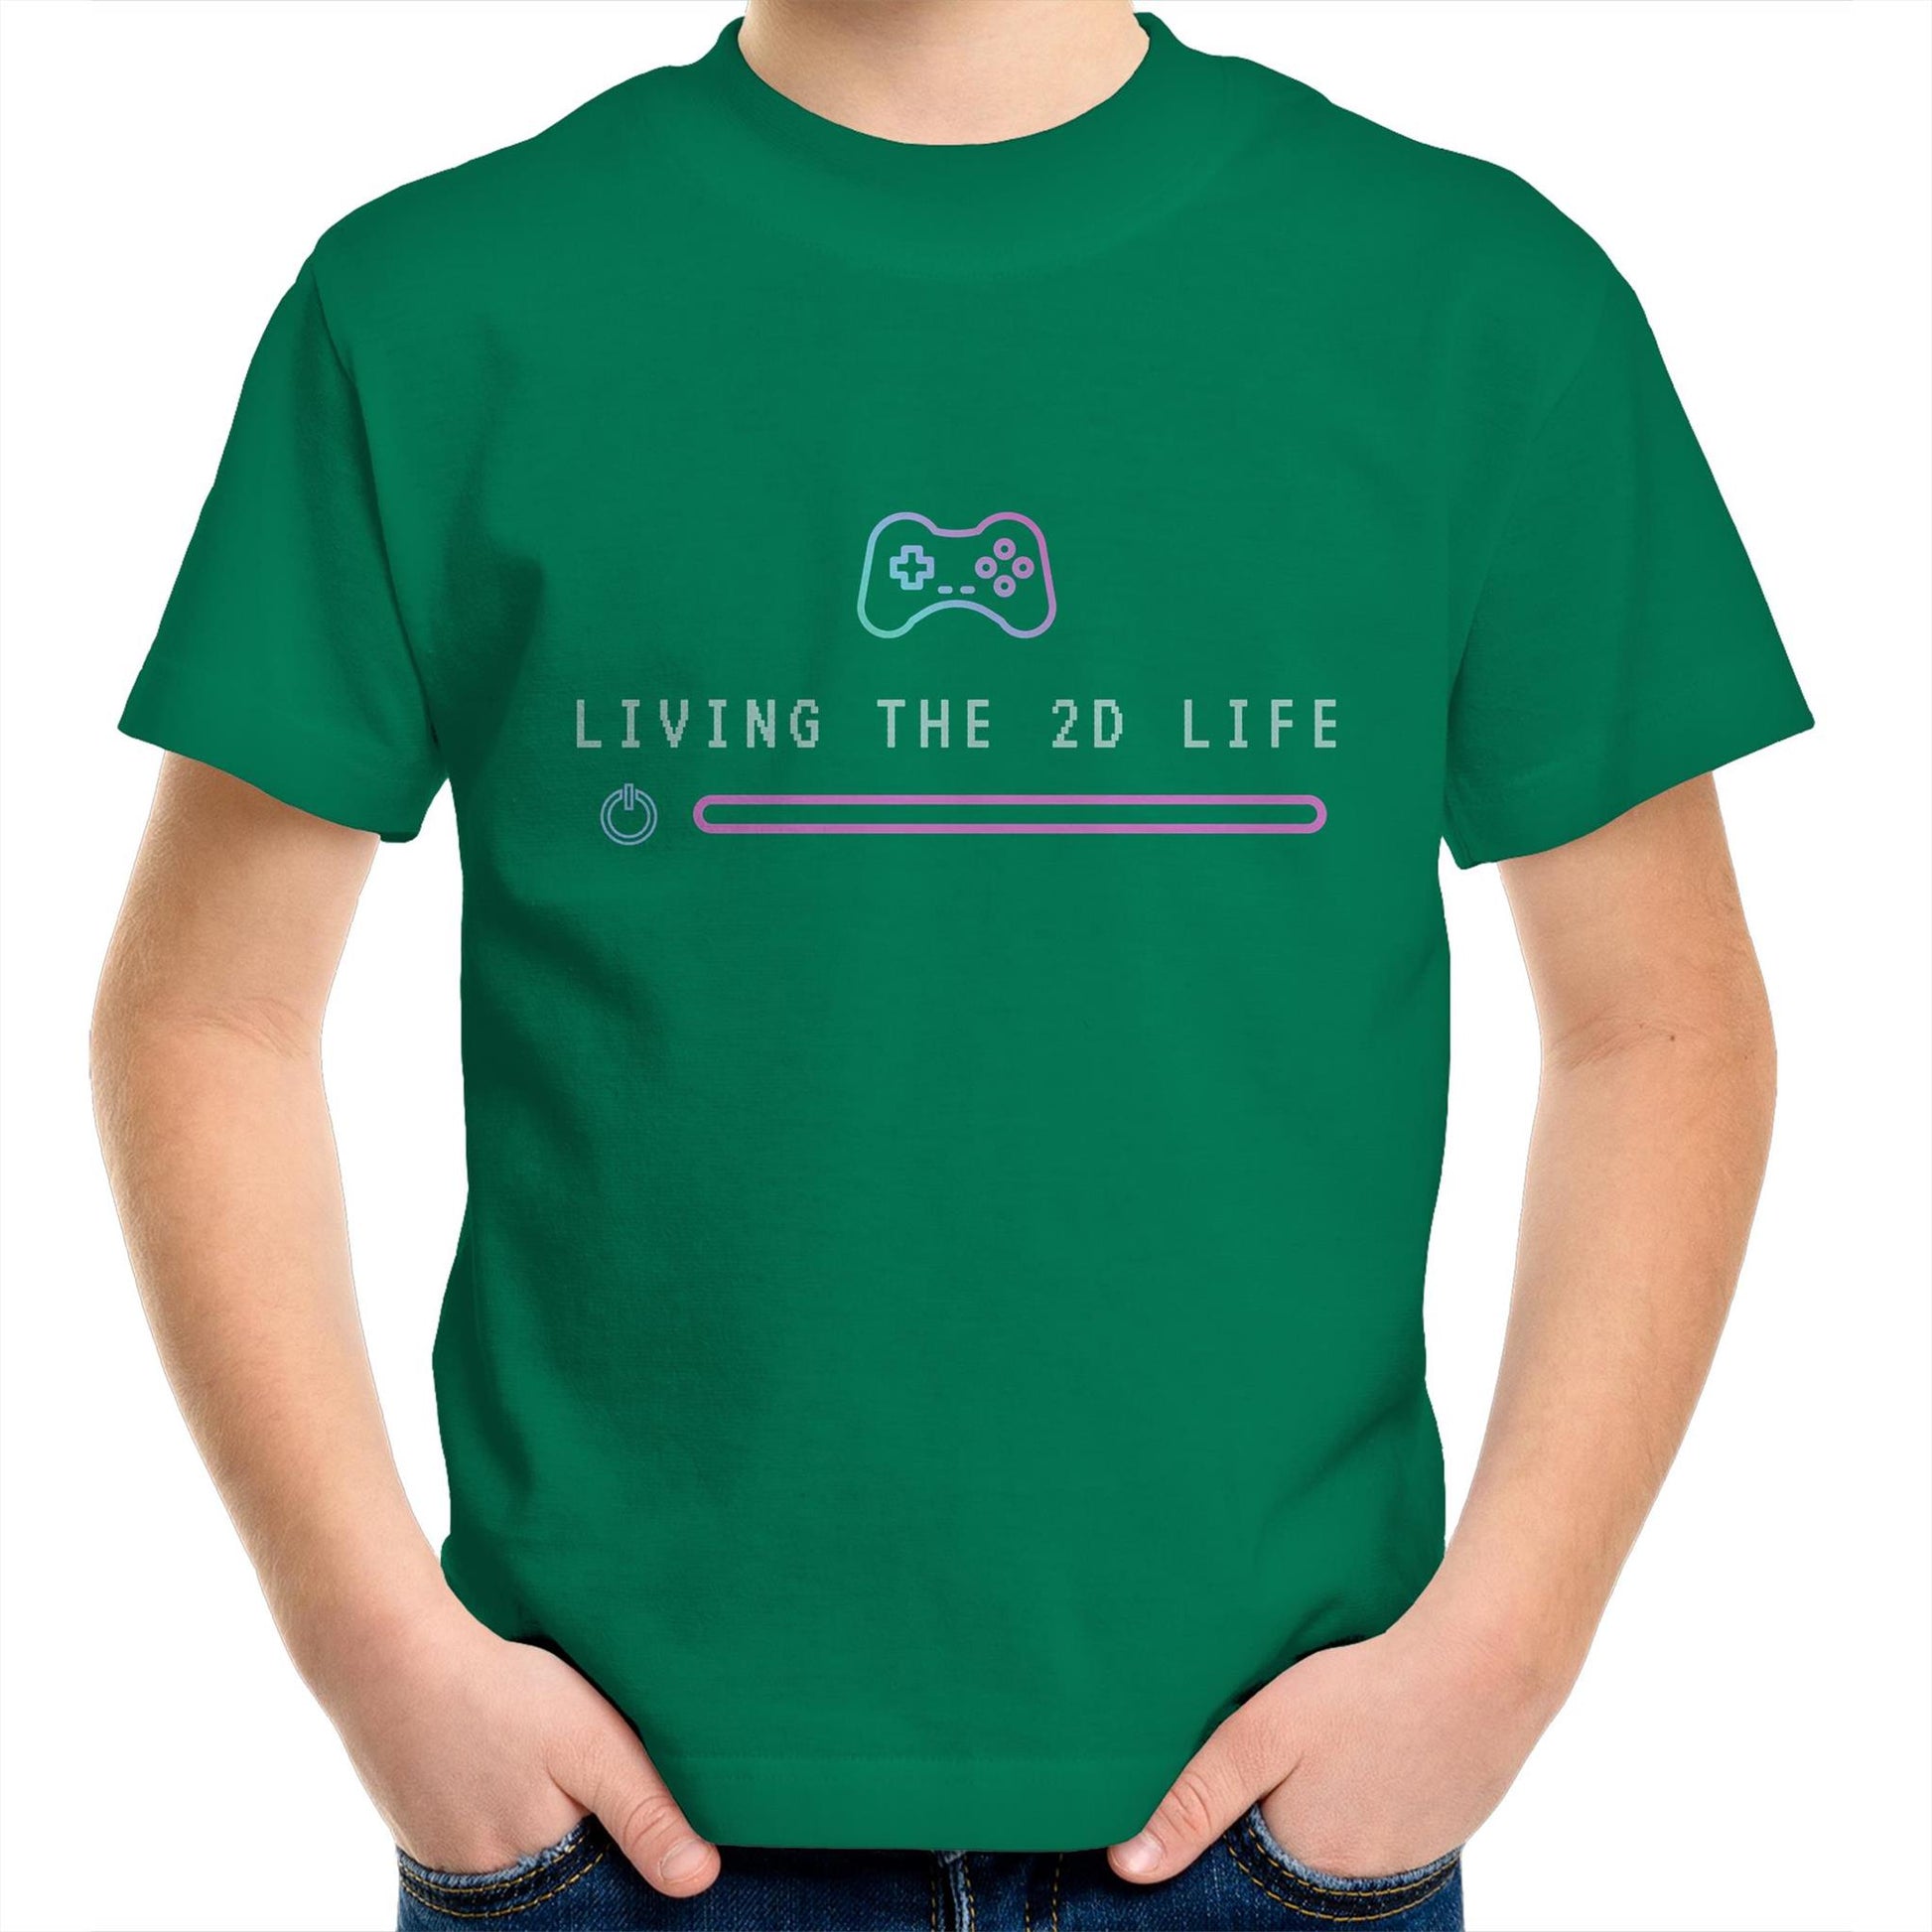 Living The 2D Life - Kids Youth Crew T-Shirt Kelly Green Kids Youth T-shirt Games Tech